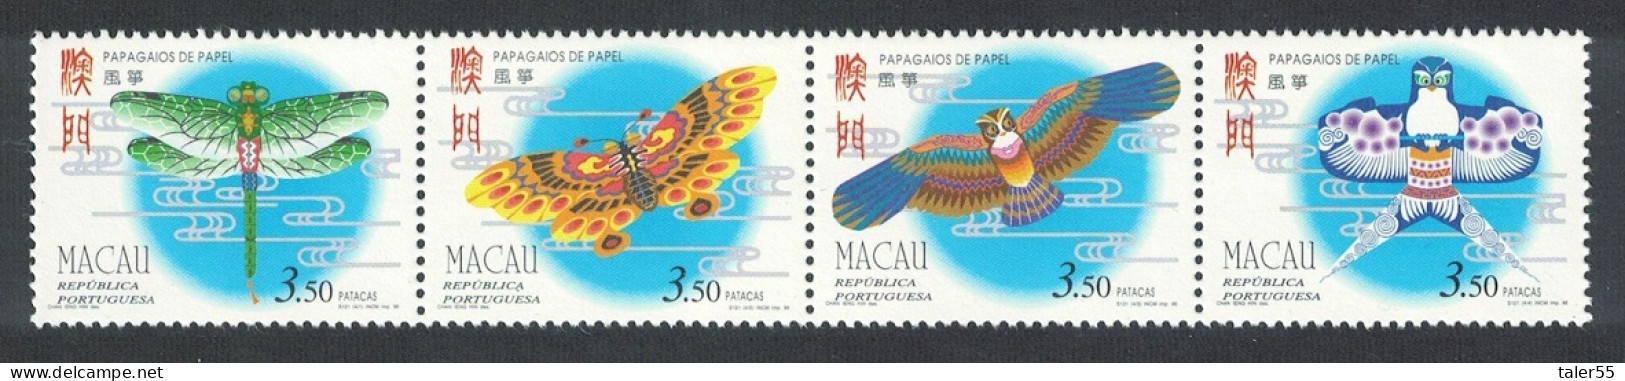 Macao Macau Paper Kites 4v Strip Def 1996 SG#958-961 Sc#844-847 - Nuovi